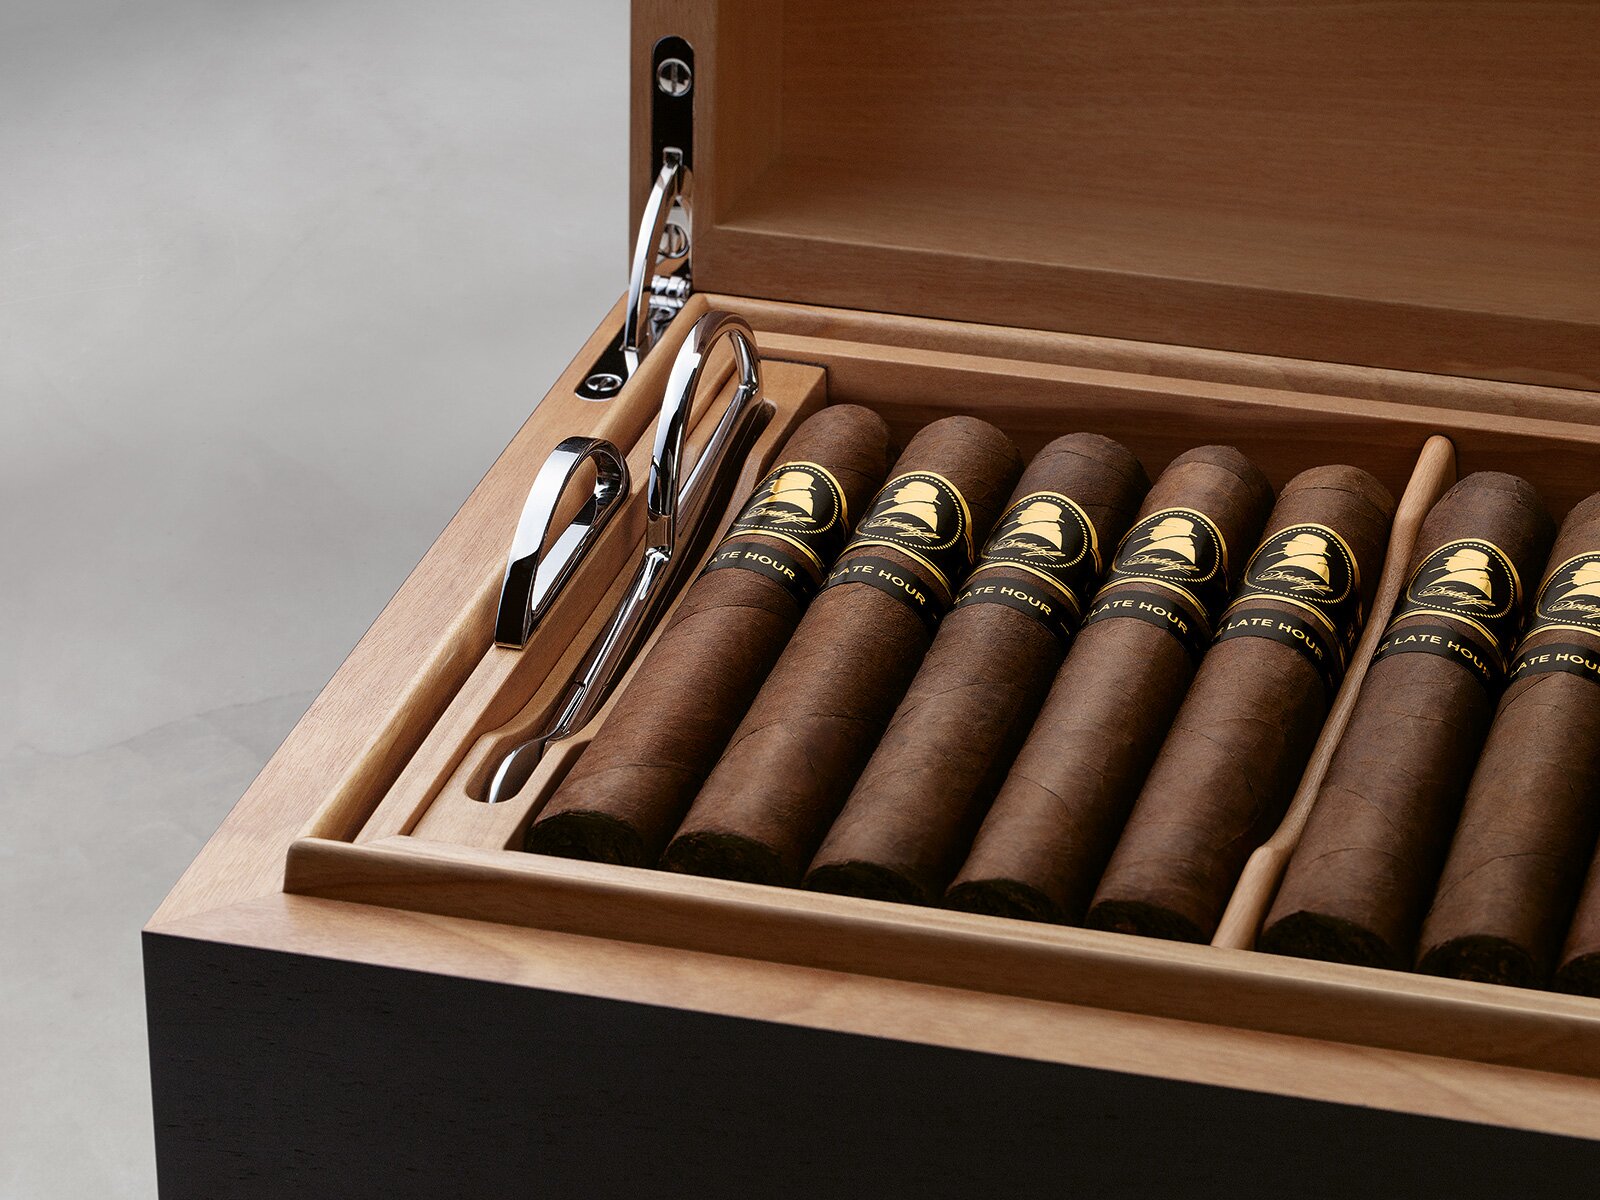 Opened Davidoff Winston Churchill Ambassador Humidor with «The Late Hour Series» cigars inside.